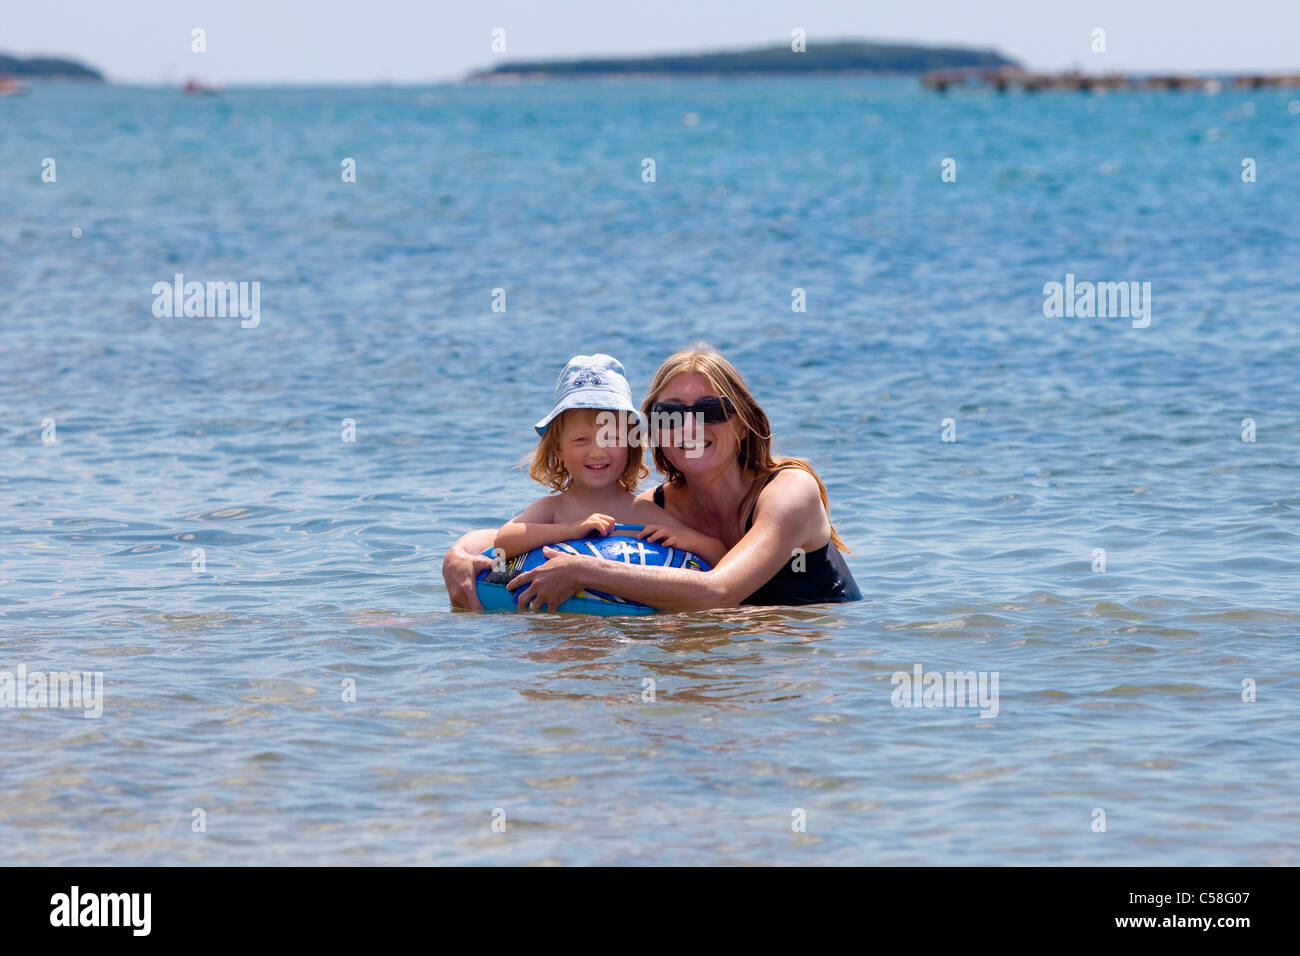 Adriatic, boy, child, coast, coastline, Croatia, day, Europe, inflatable, istra, Istria, Mediterranean, mother, ring, sea, summe Stock Photo